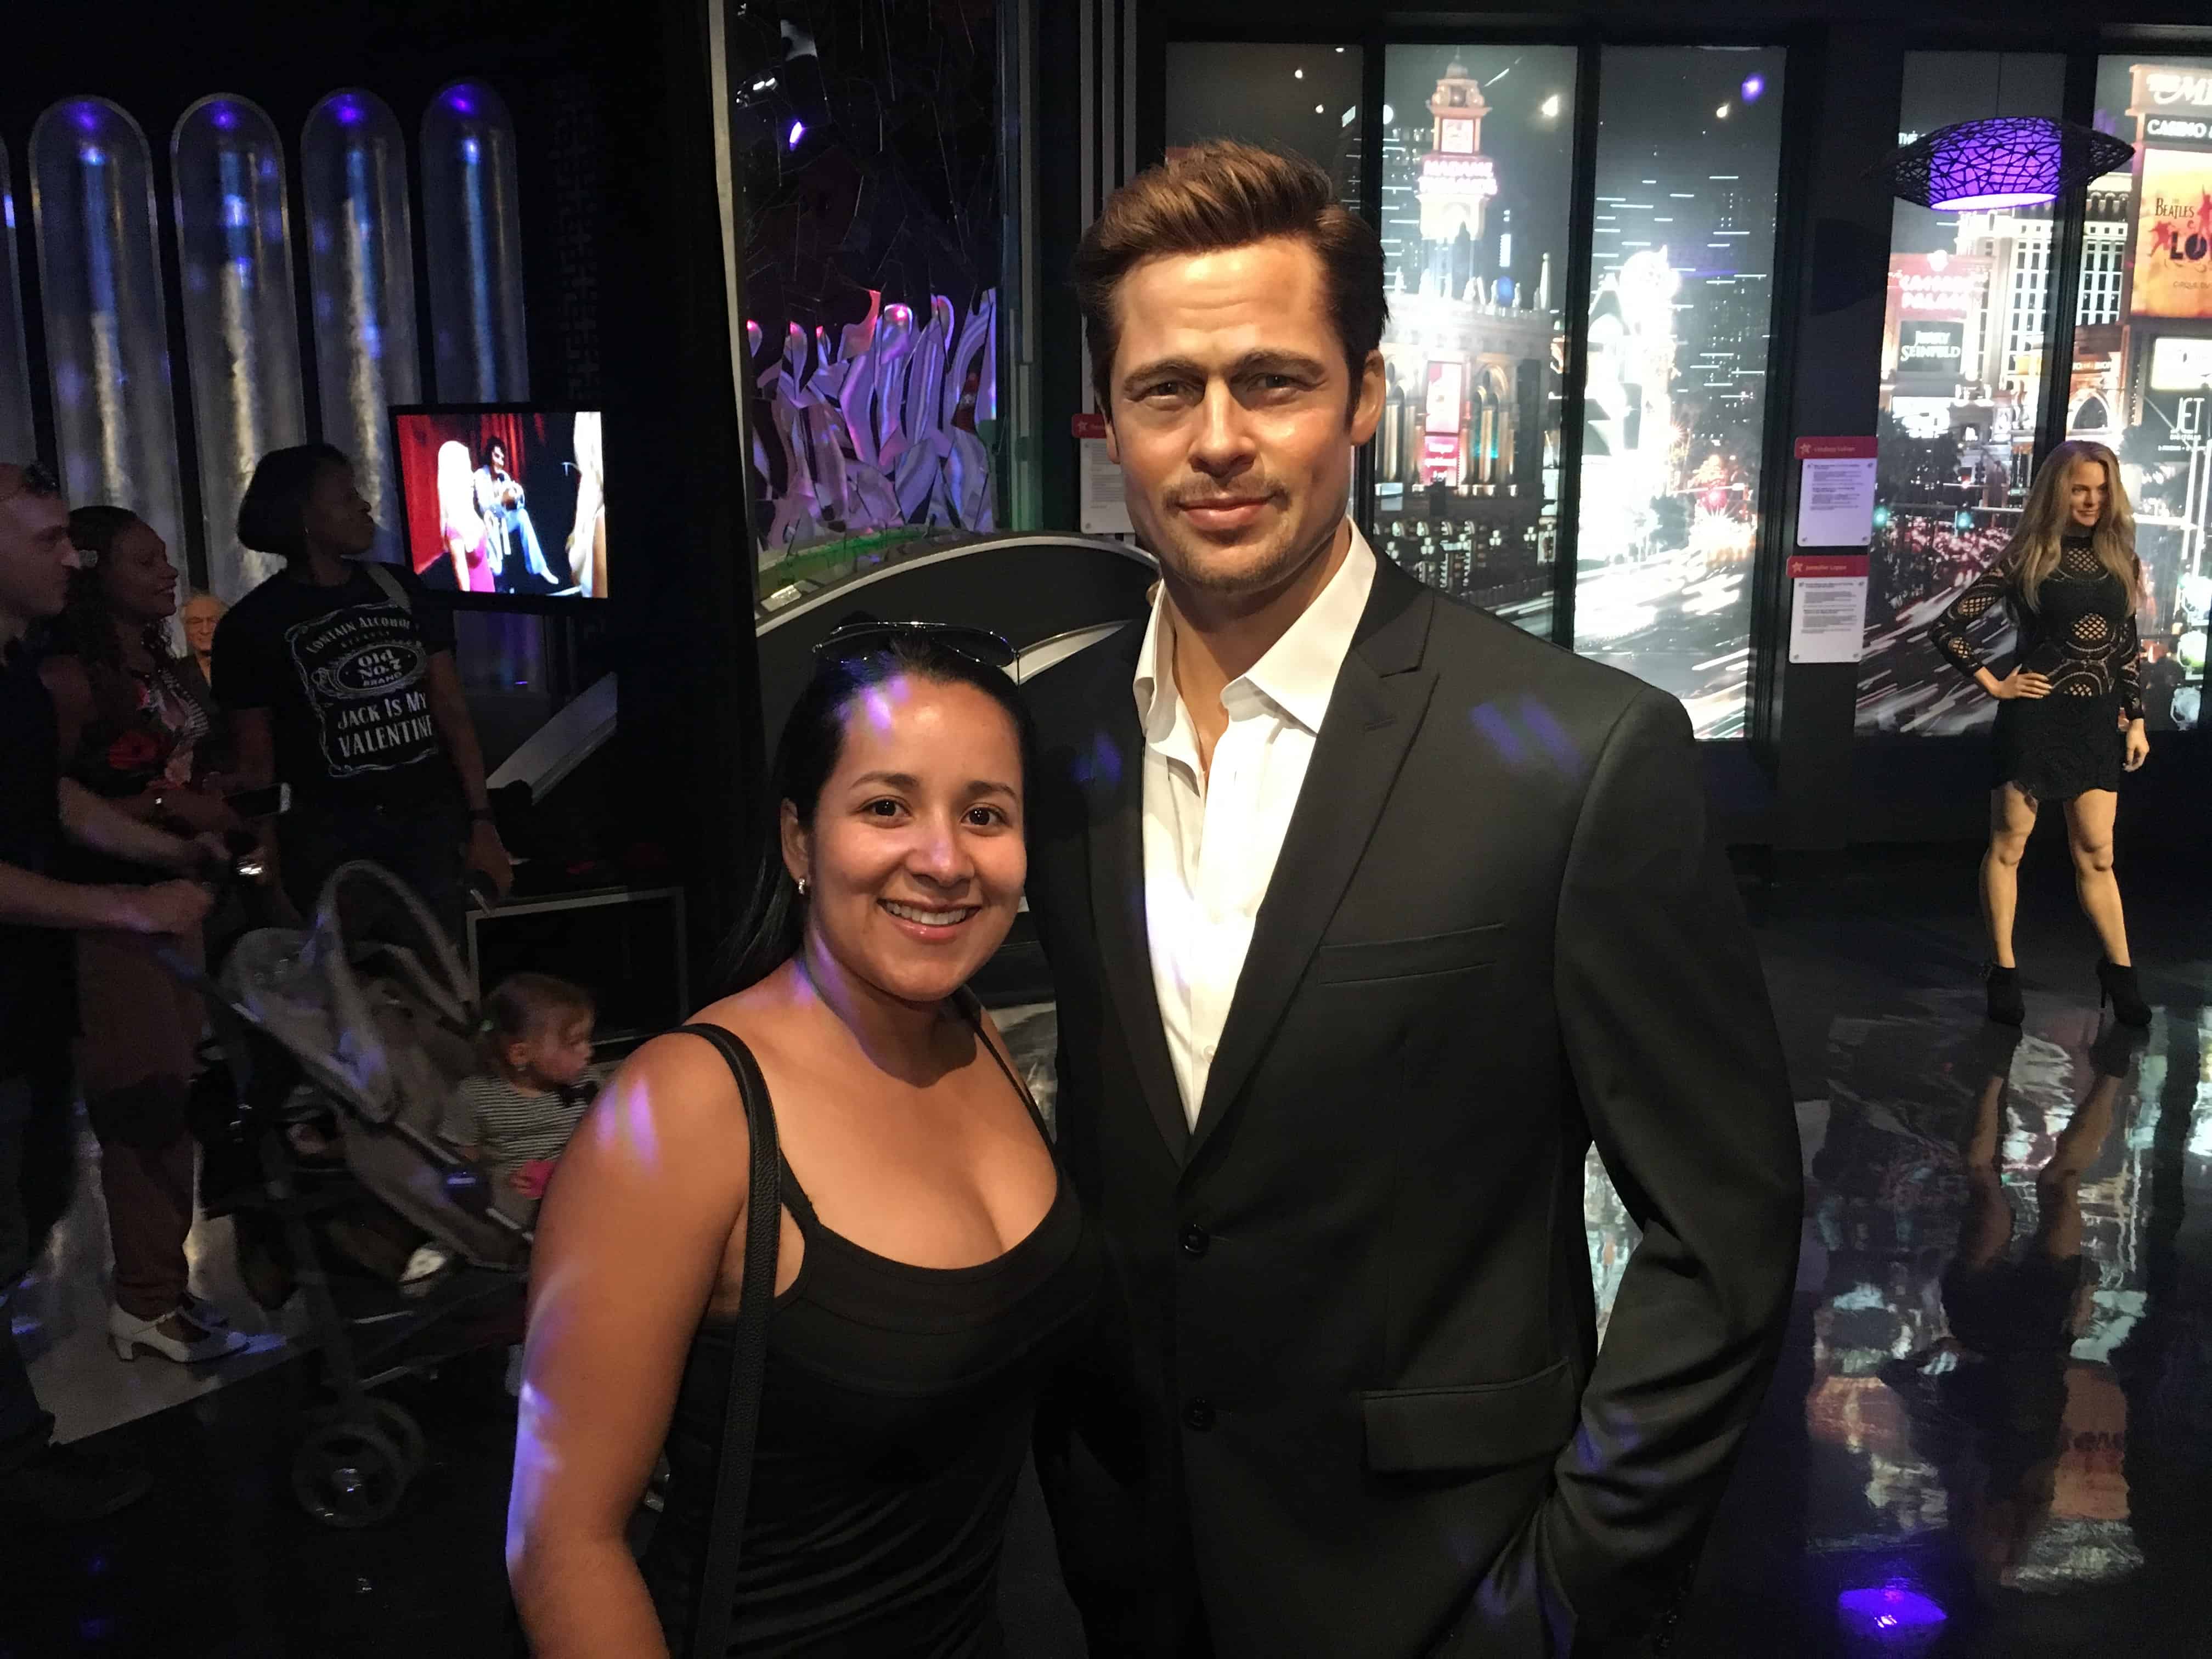 Marisol with Brad Pitt at Madame Tussauds Las Vegas